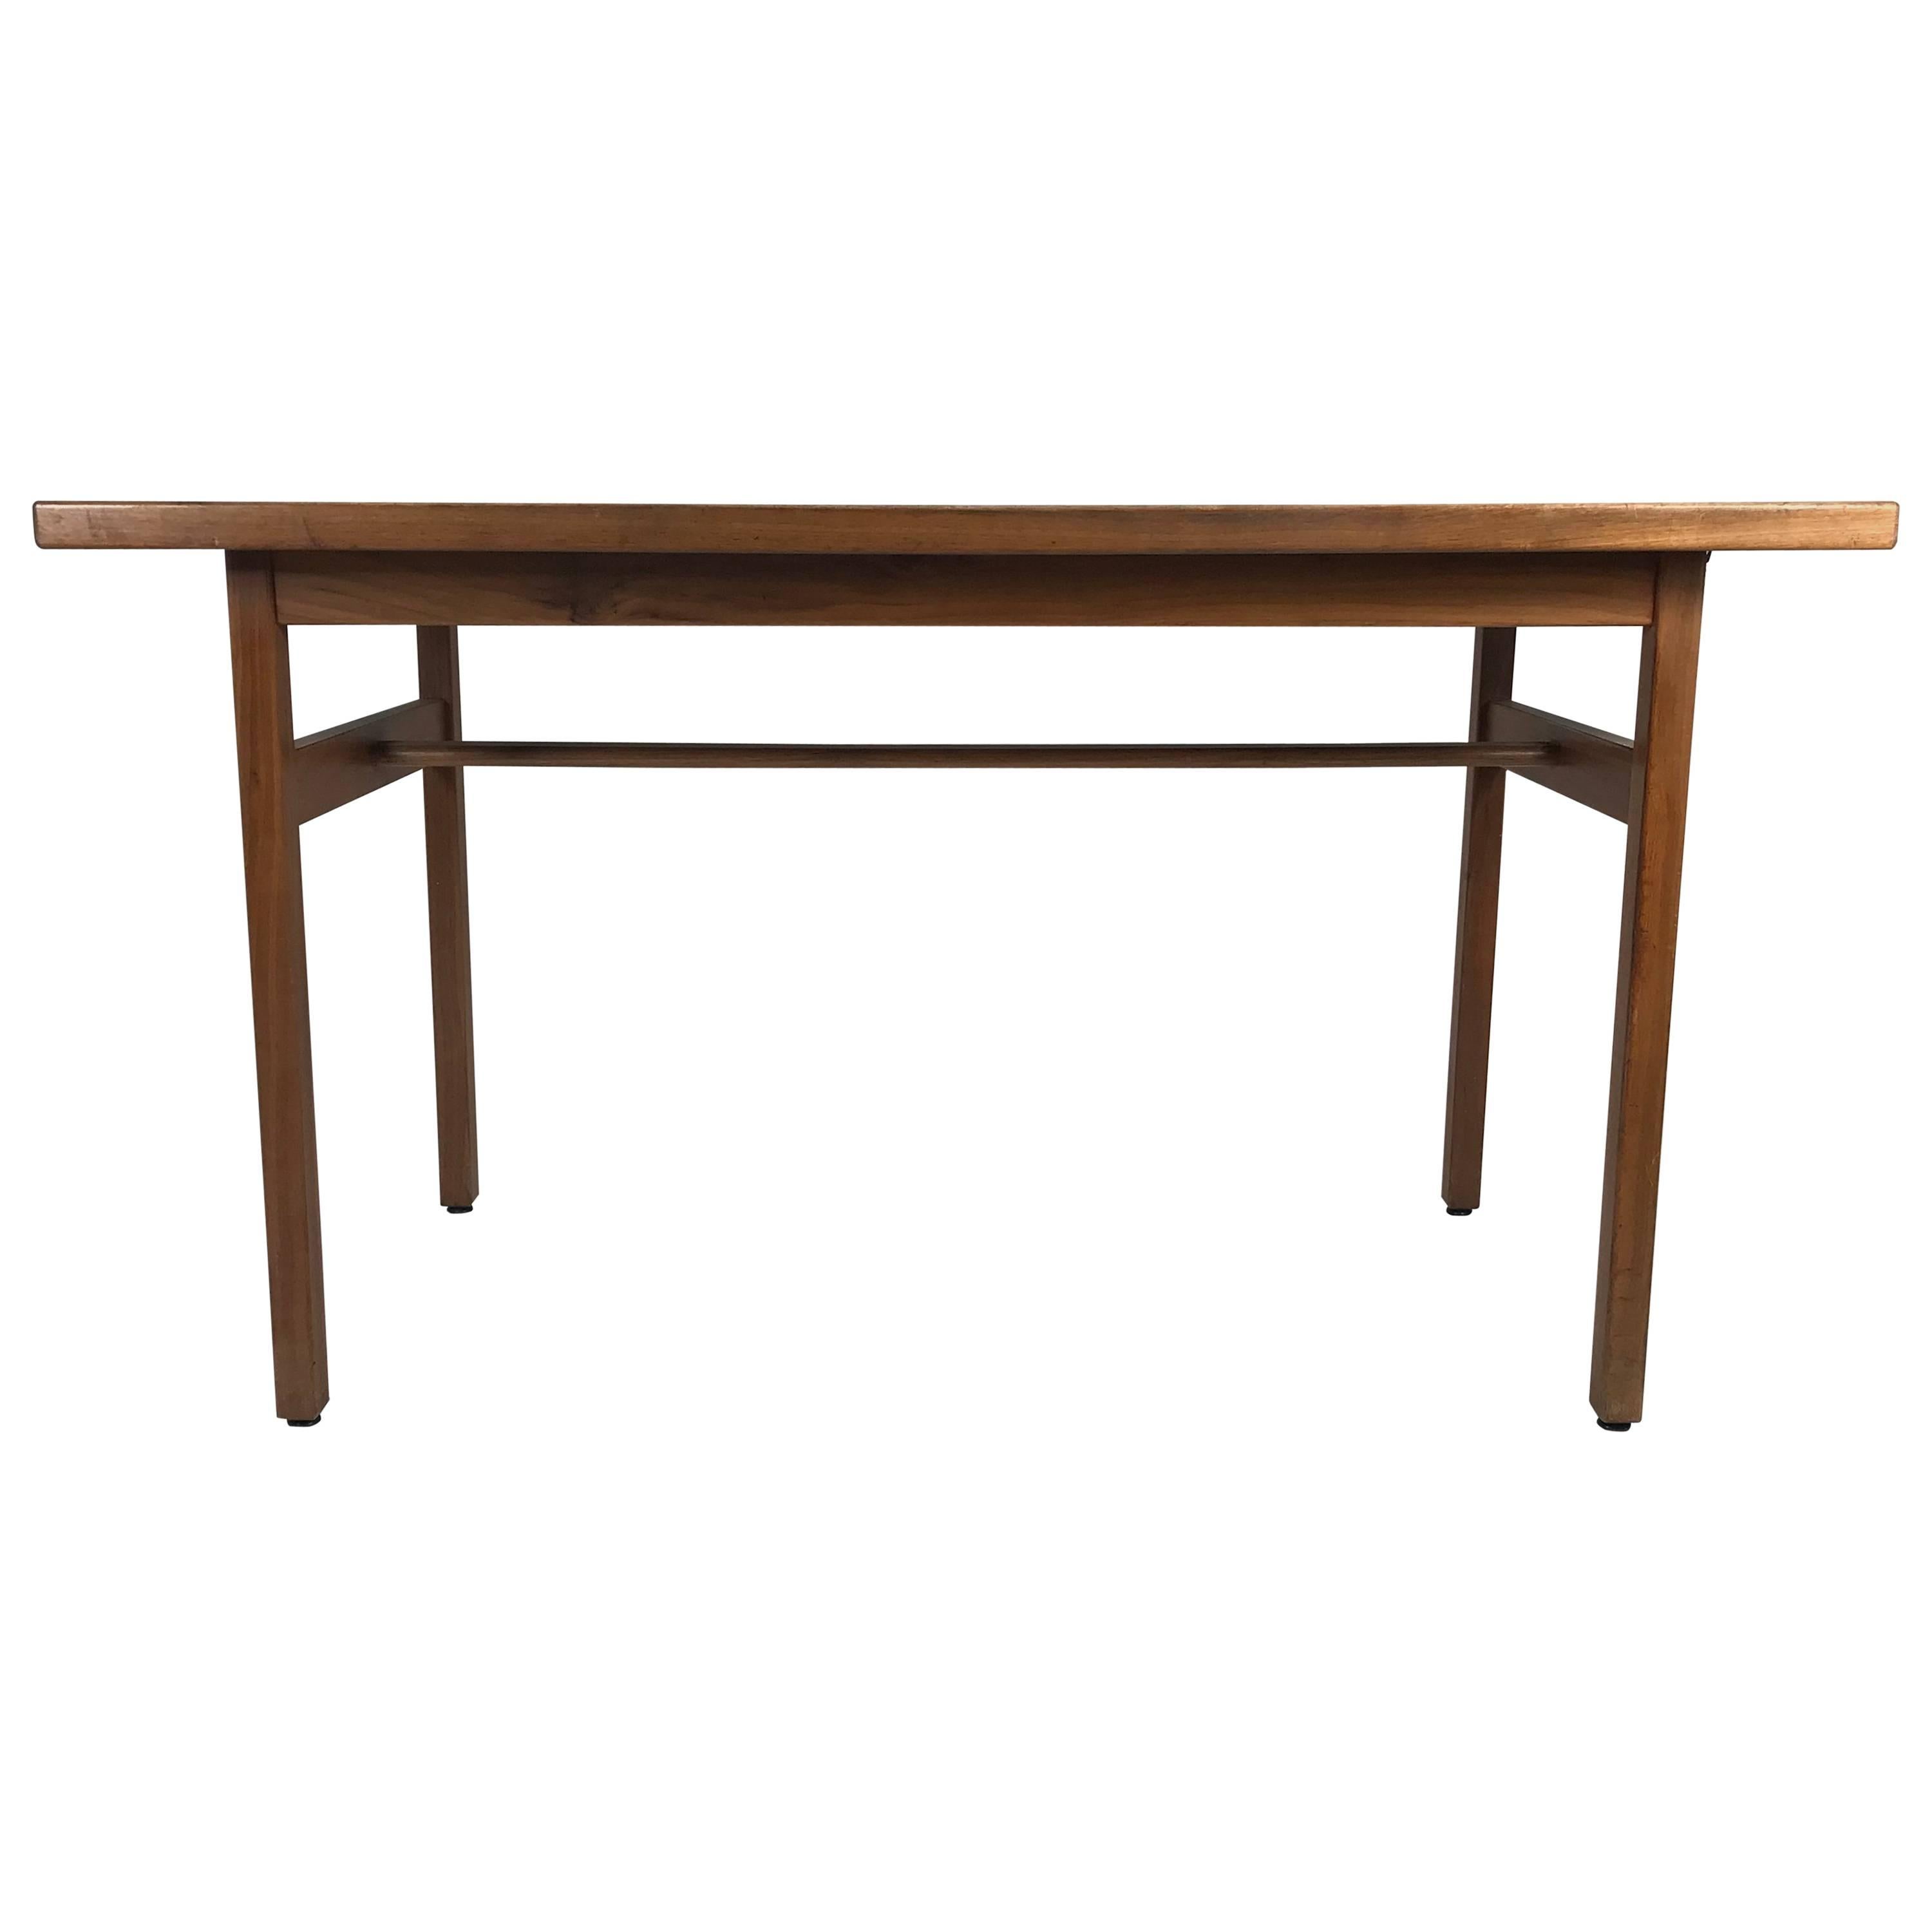 Classic Modernist Table or Desk Designed by Jens Risom